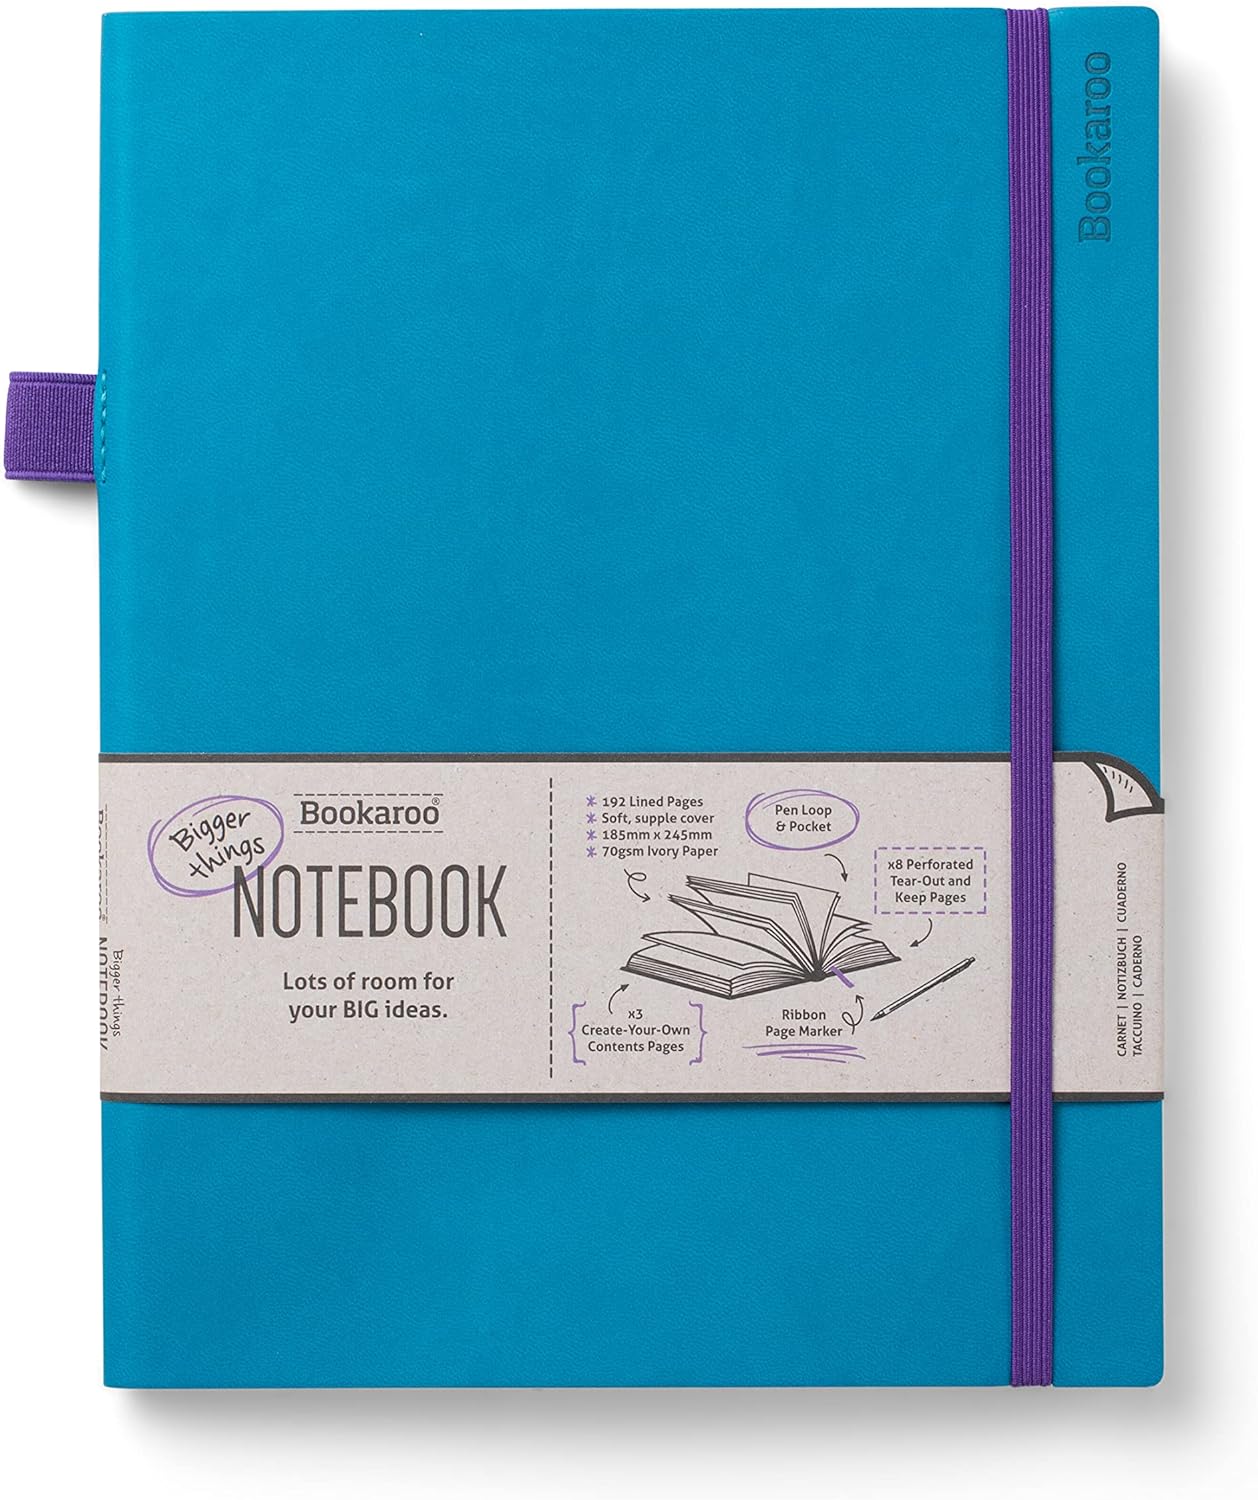 Bookaroo Bigger Things Notebook Journal Turquoise